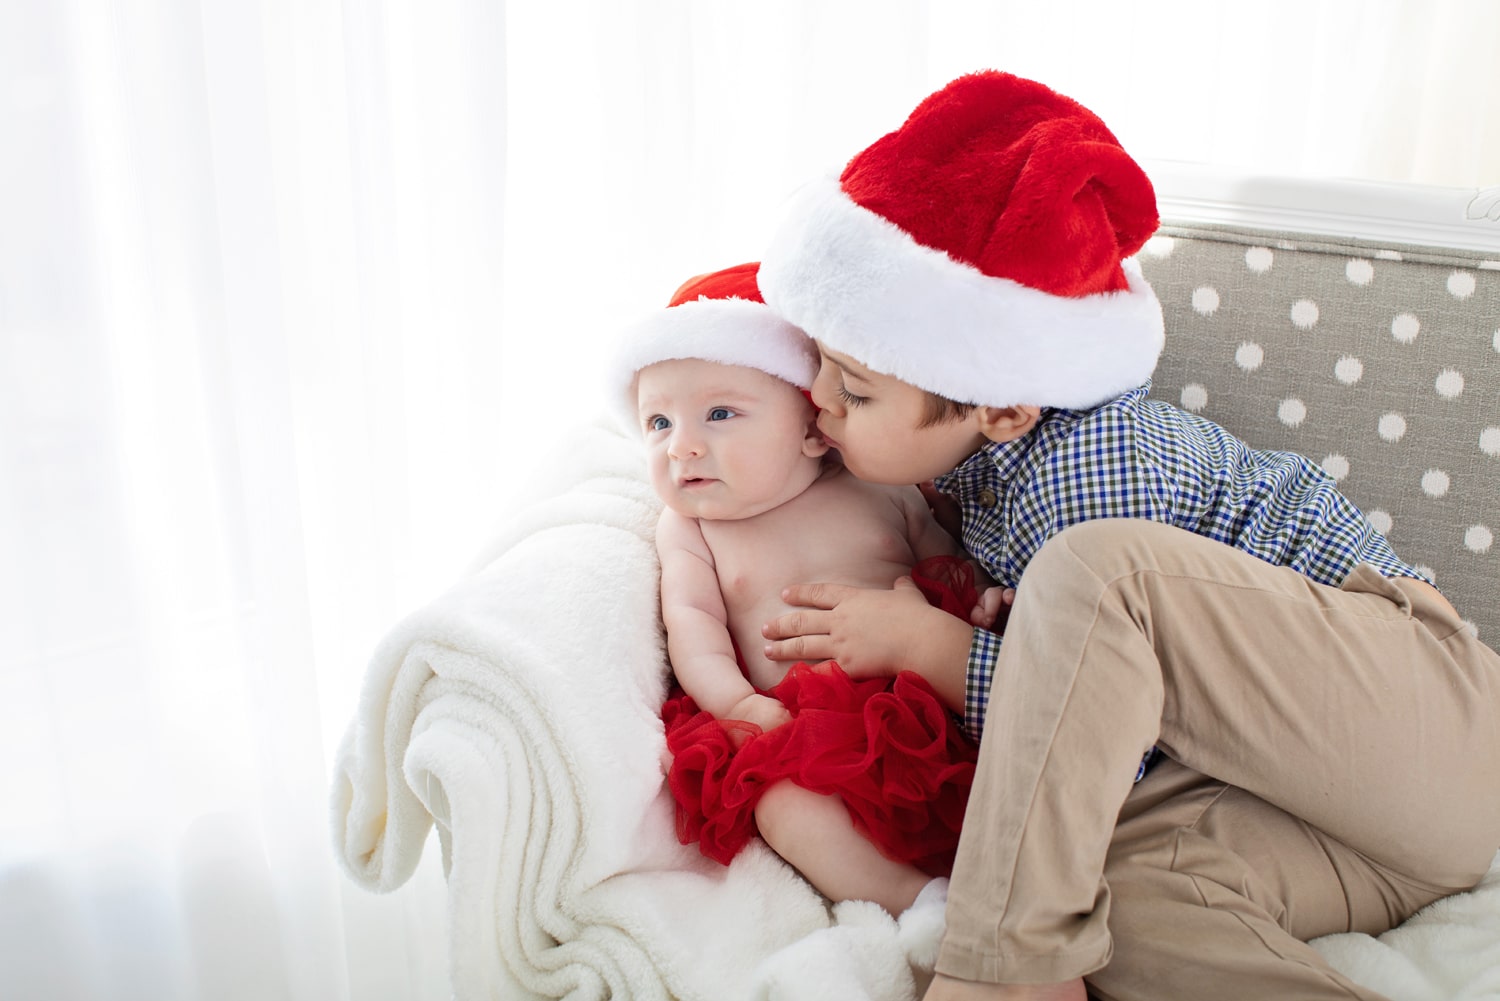 A boy in a Santa hat kisses his baby sibling.